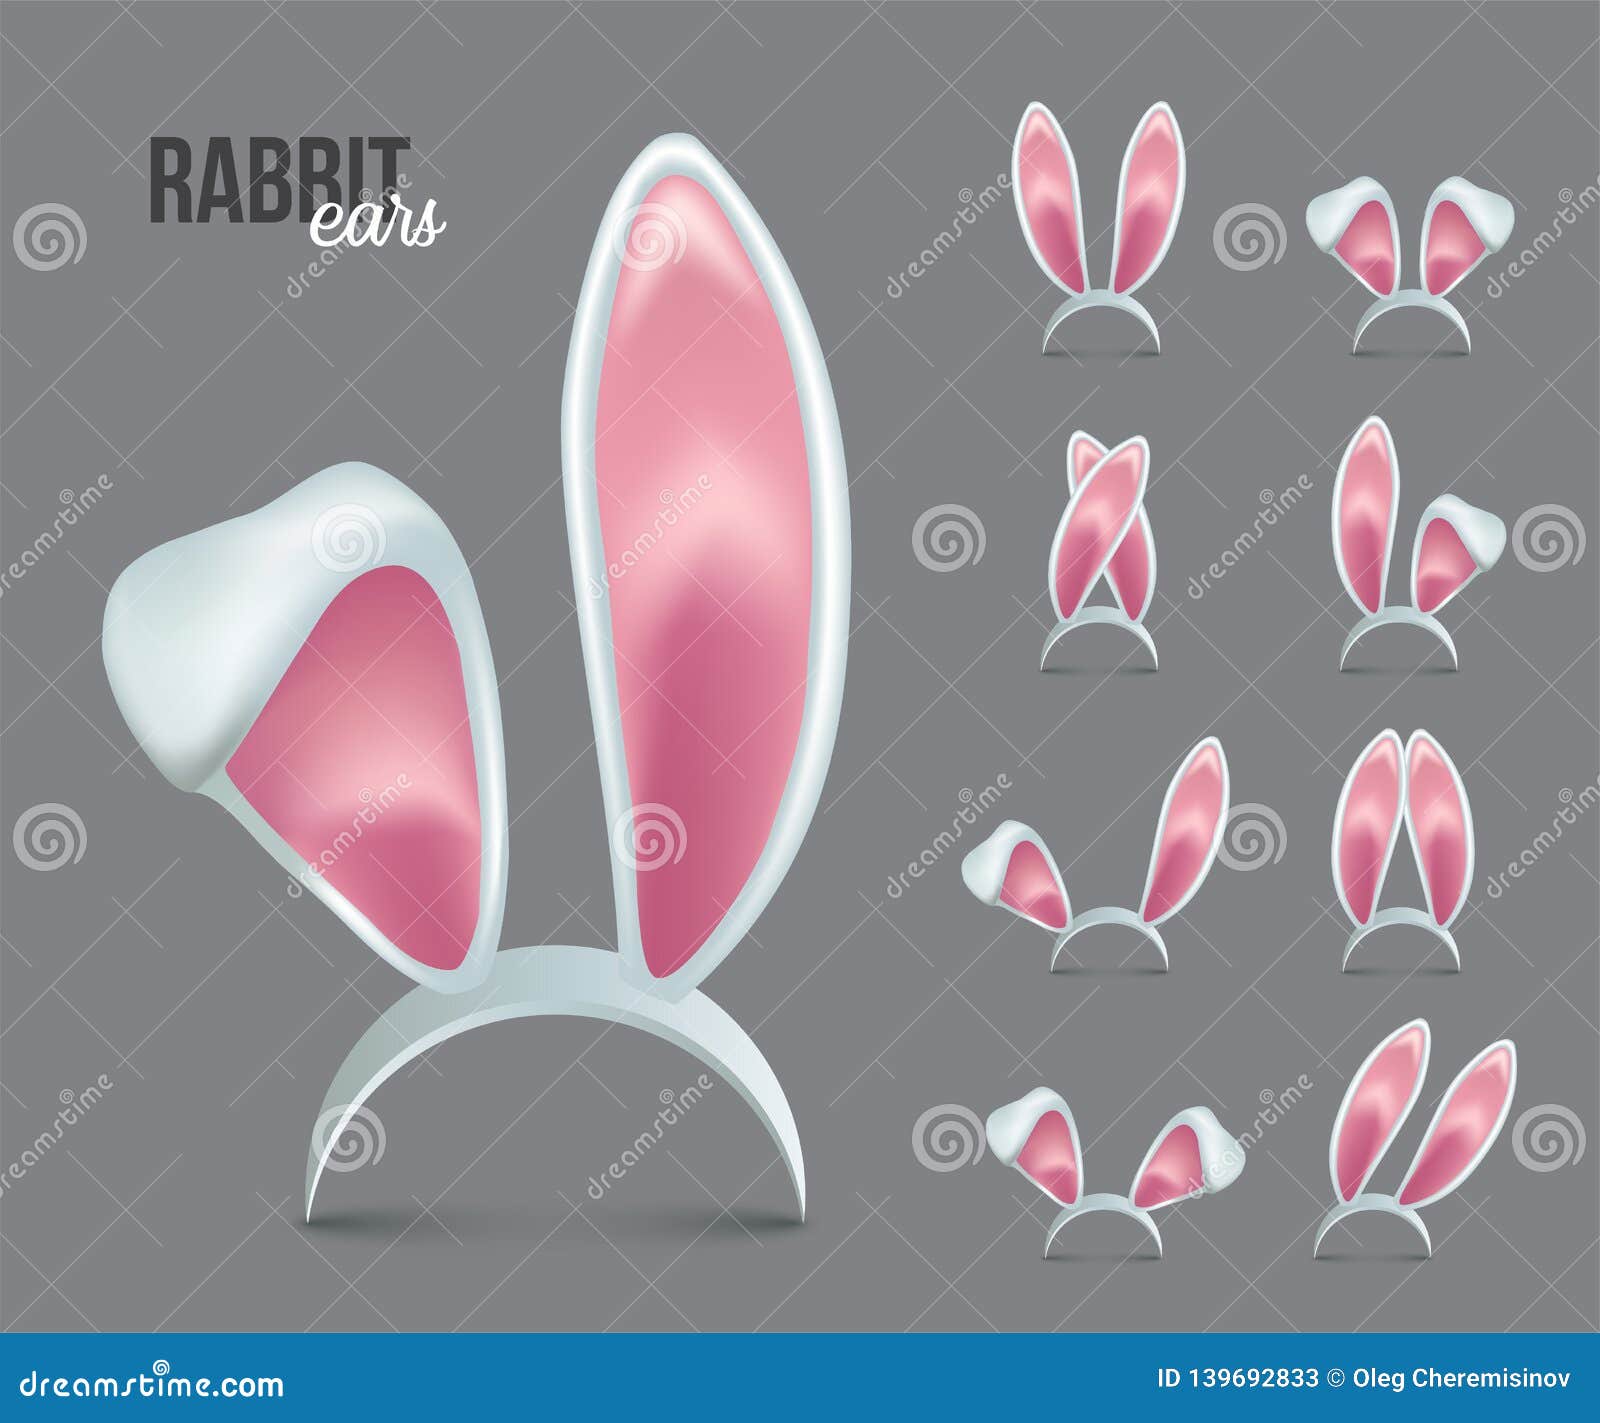 rabbit ears realistic 3d  s set